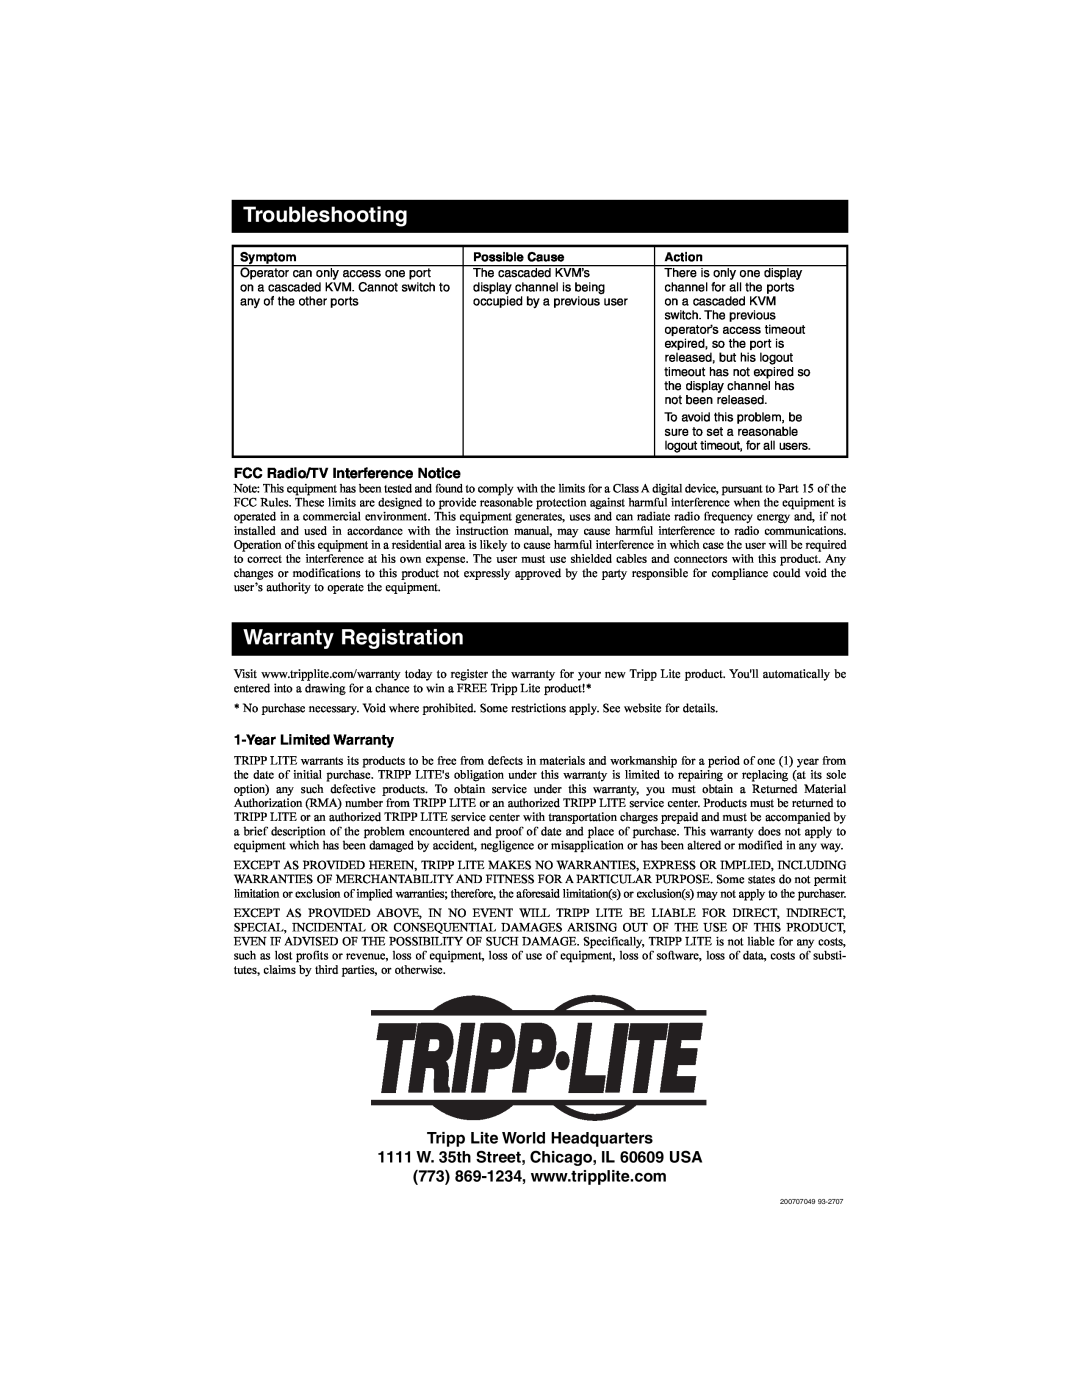 Tripp Lite B060-016-2 Troubleshooting, Warranty Registration, FCC Radio/TV Interference Notice, Year Limited Warranty 